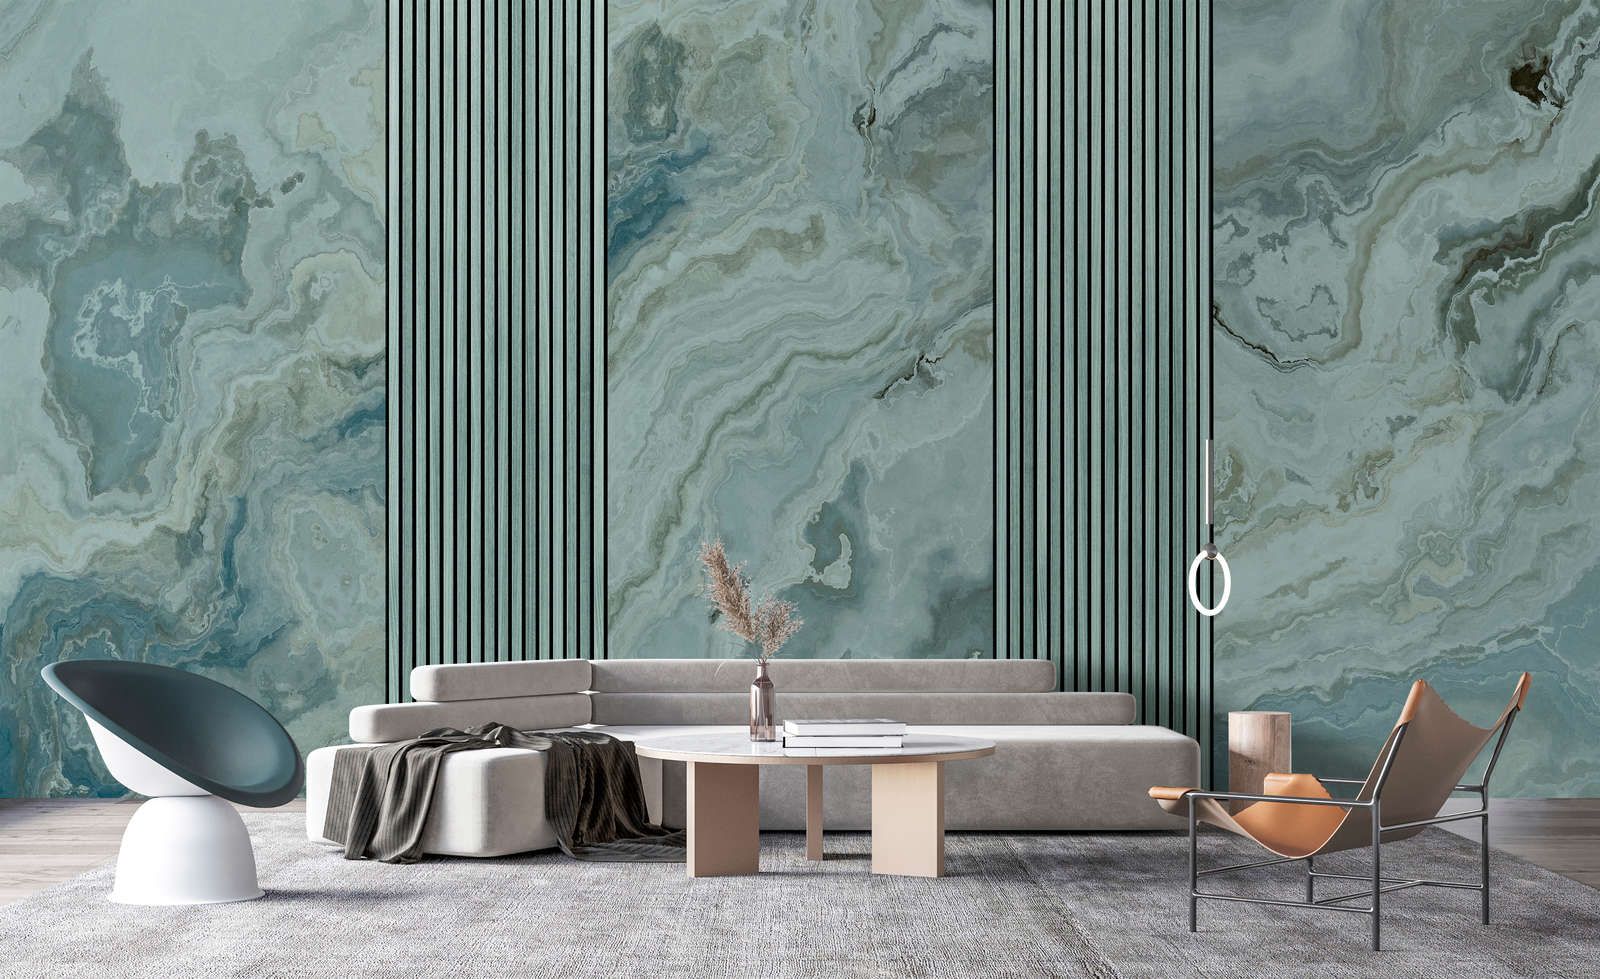             Photo wallpaper »travertino 1« - Panels & Marble - Petrol | Matt, Smooth non-woven
        